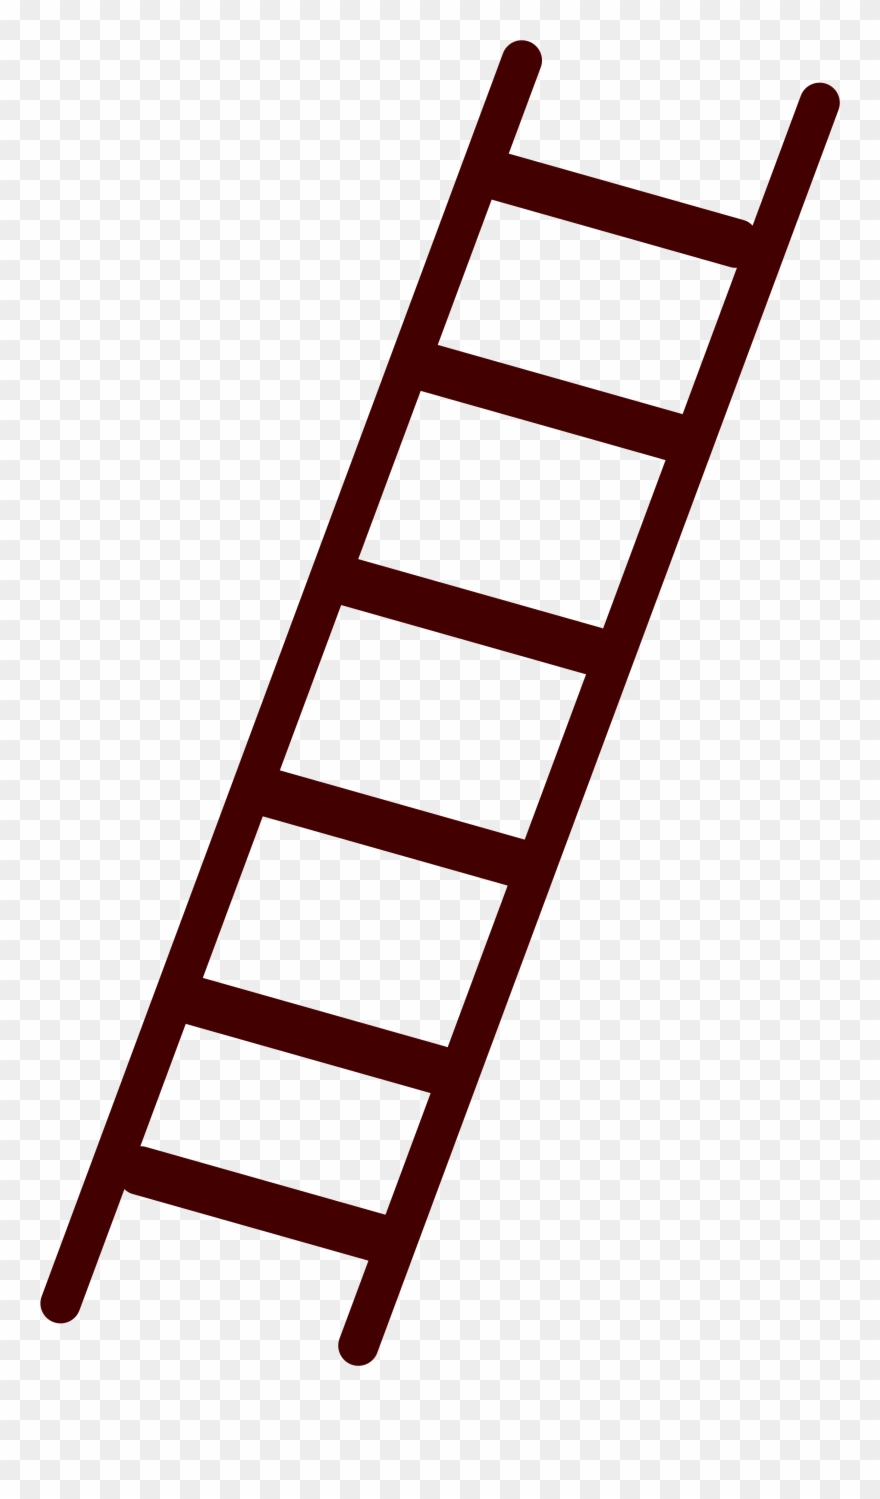 Png download pinclipart . Ladder clipart short ladder